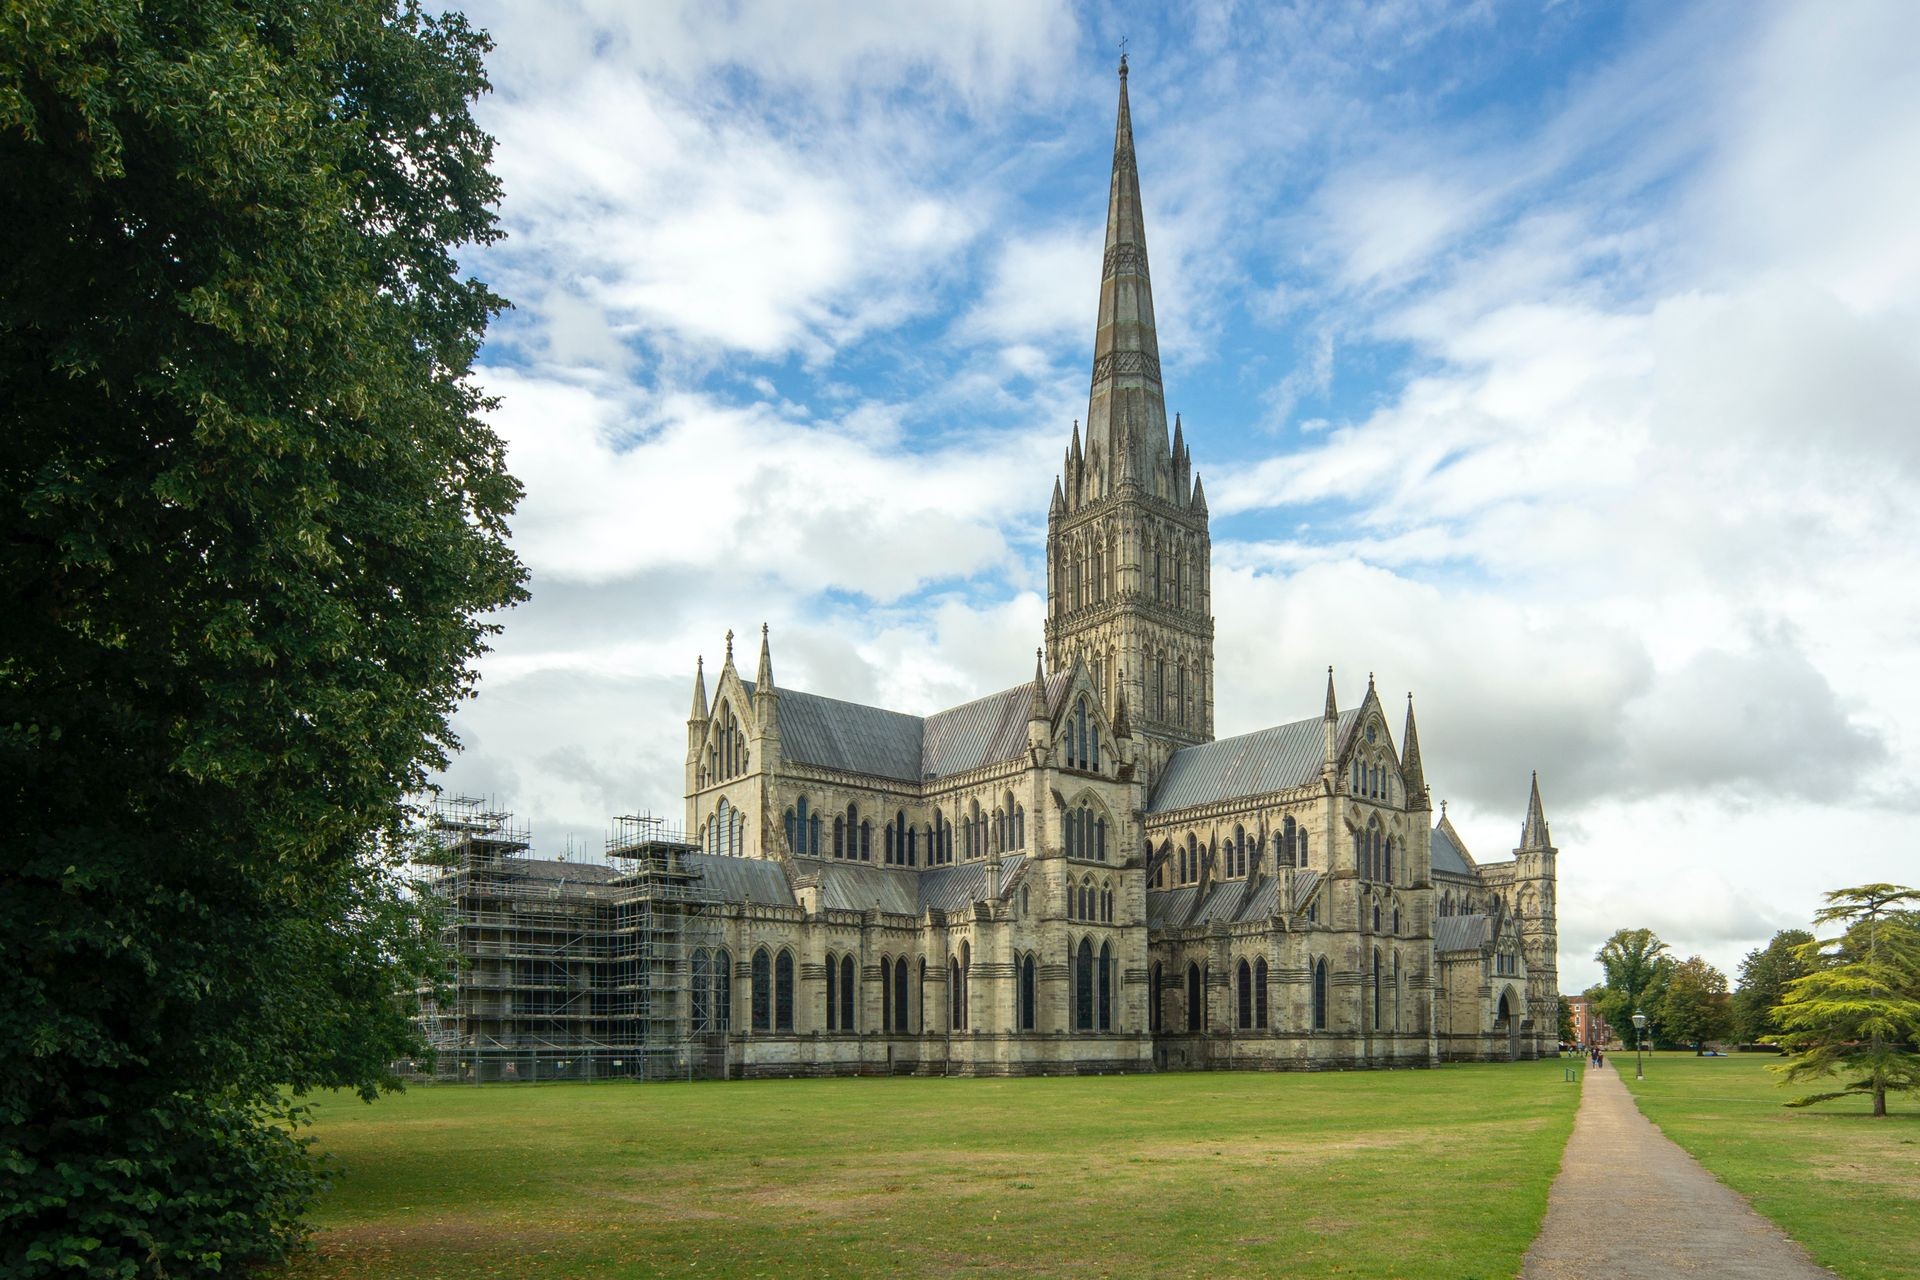 5. Salisbury Cathedral